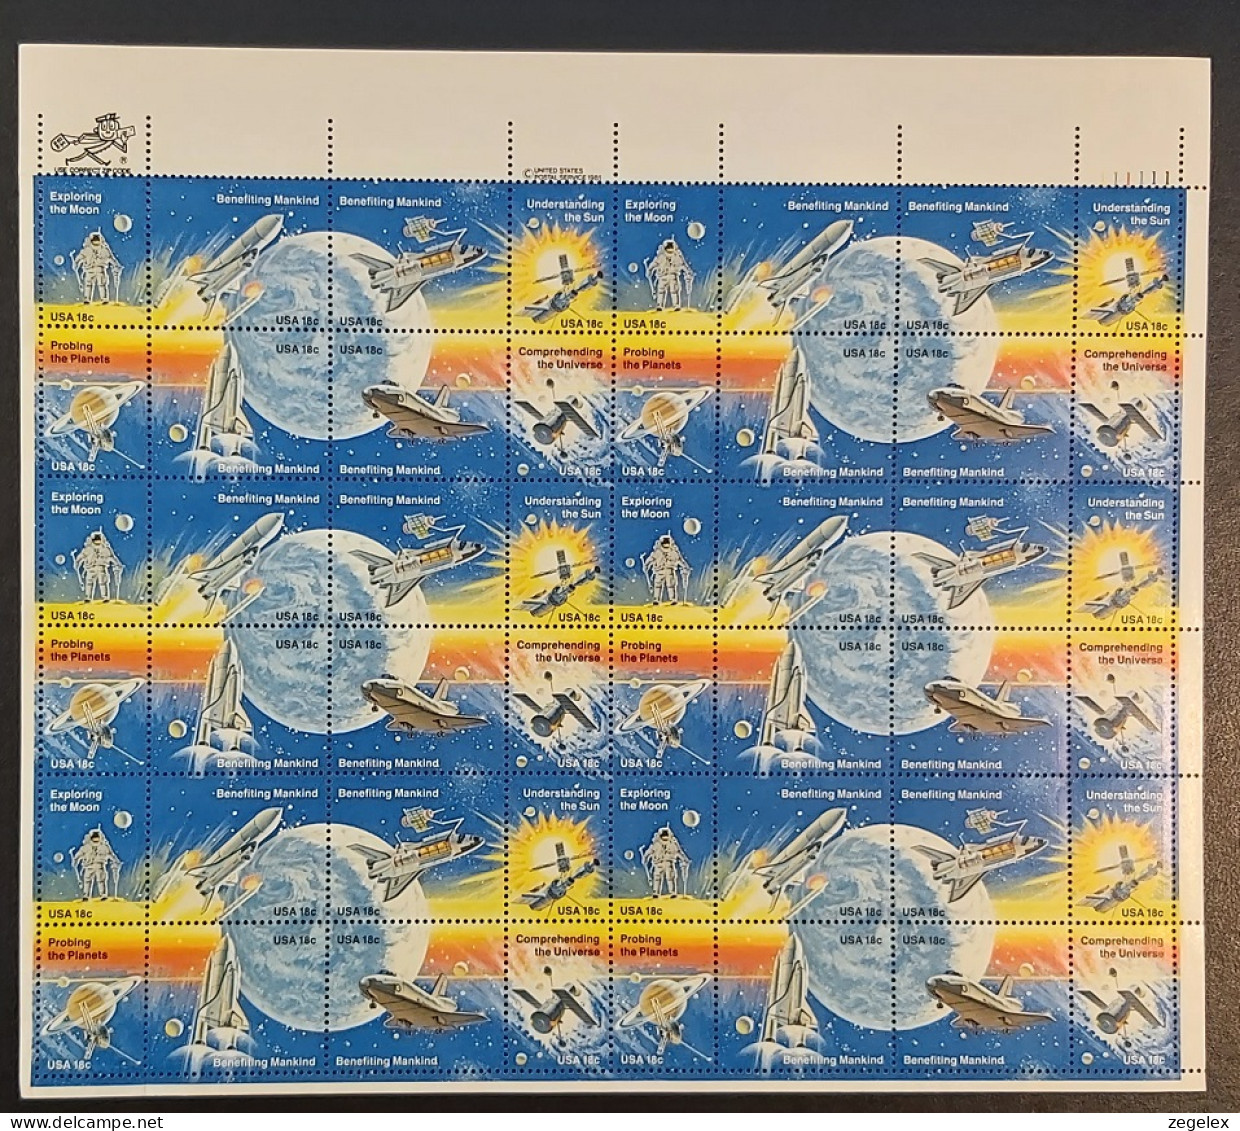 USA 1981 Space Achievement Issue - 6 X Block Of 8 Stamps MNH** Scott No. 1912-1919a - Feuilles Complètes